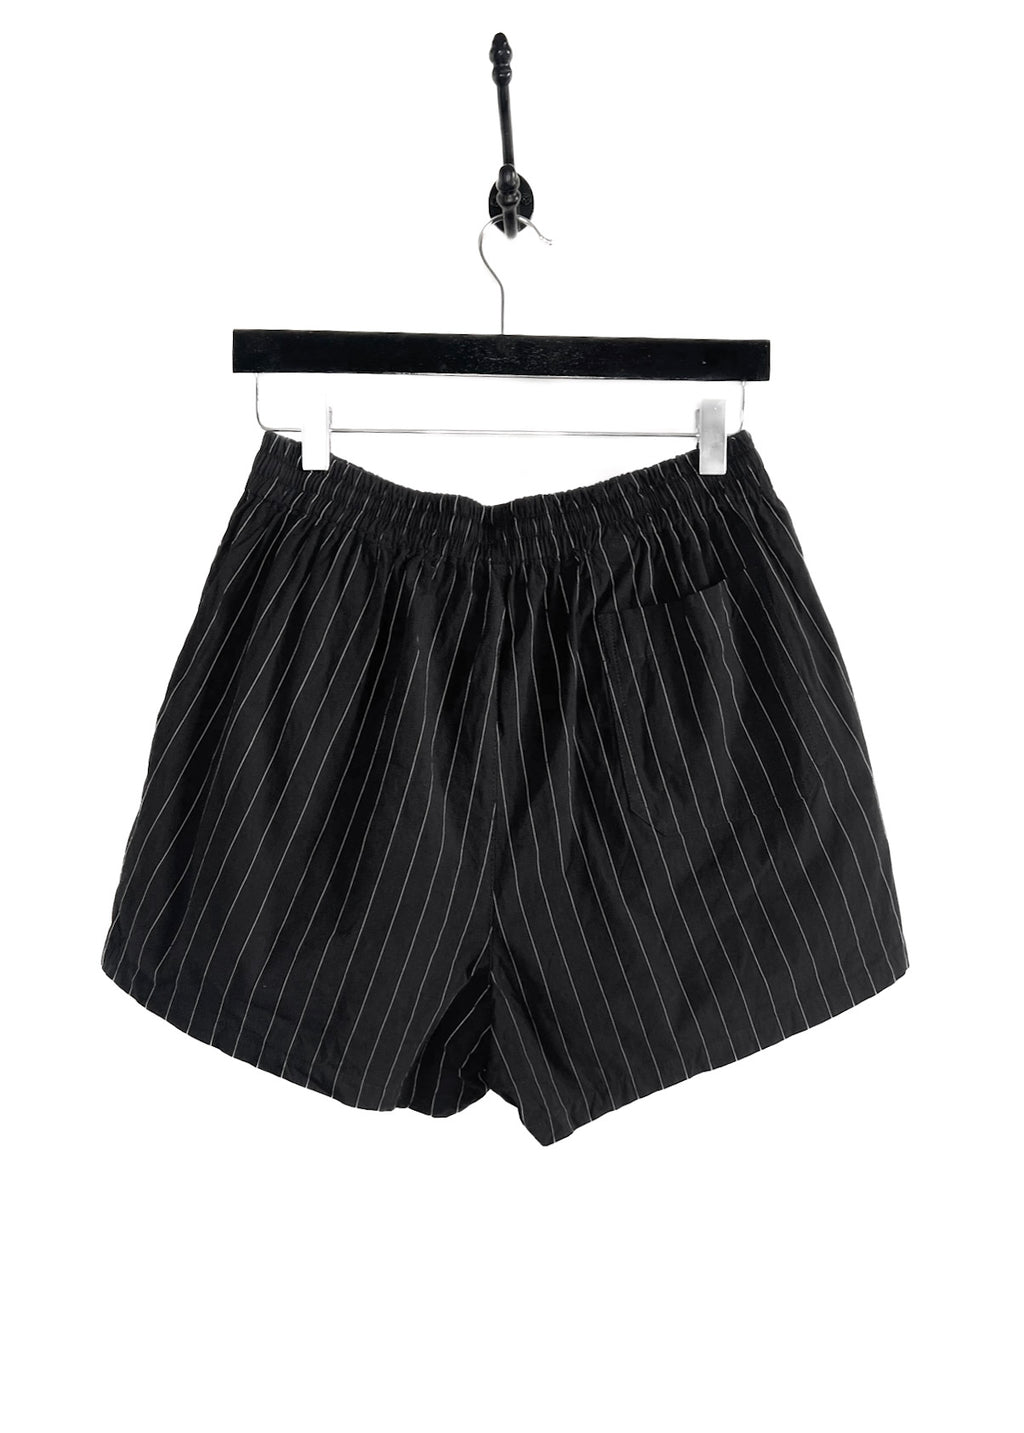 Dries Van Noten Black Pinstripe Cotton Shorts